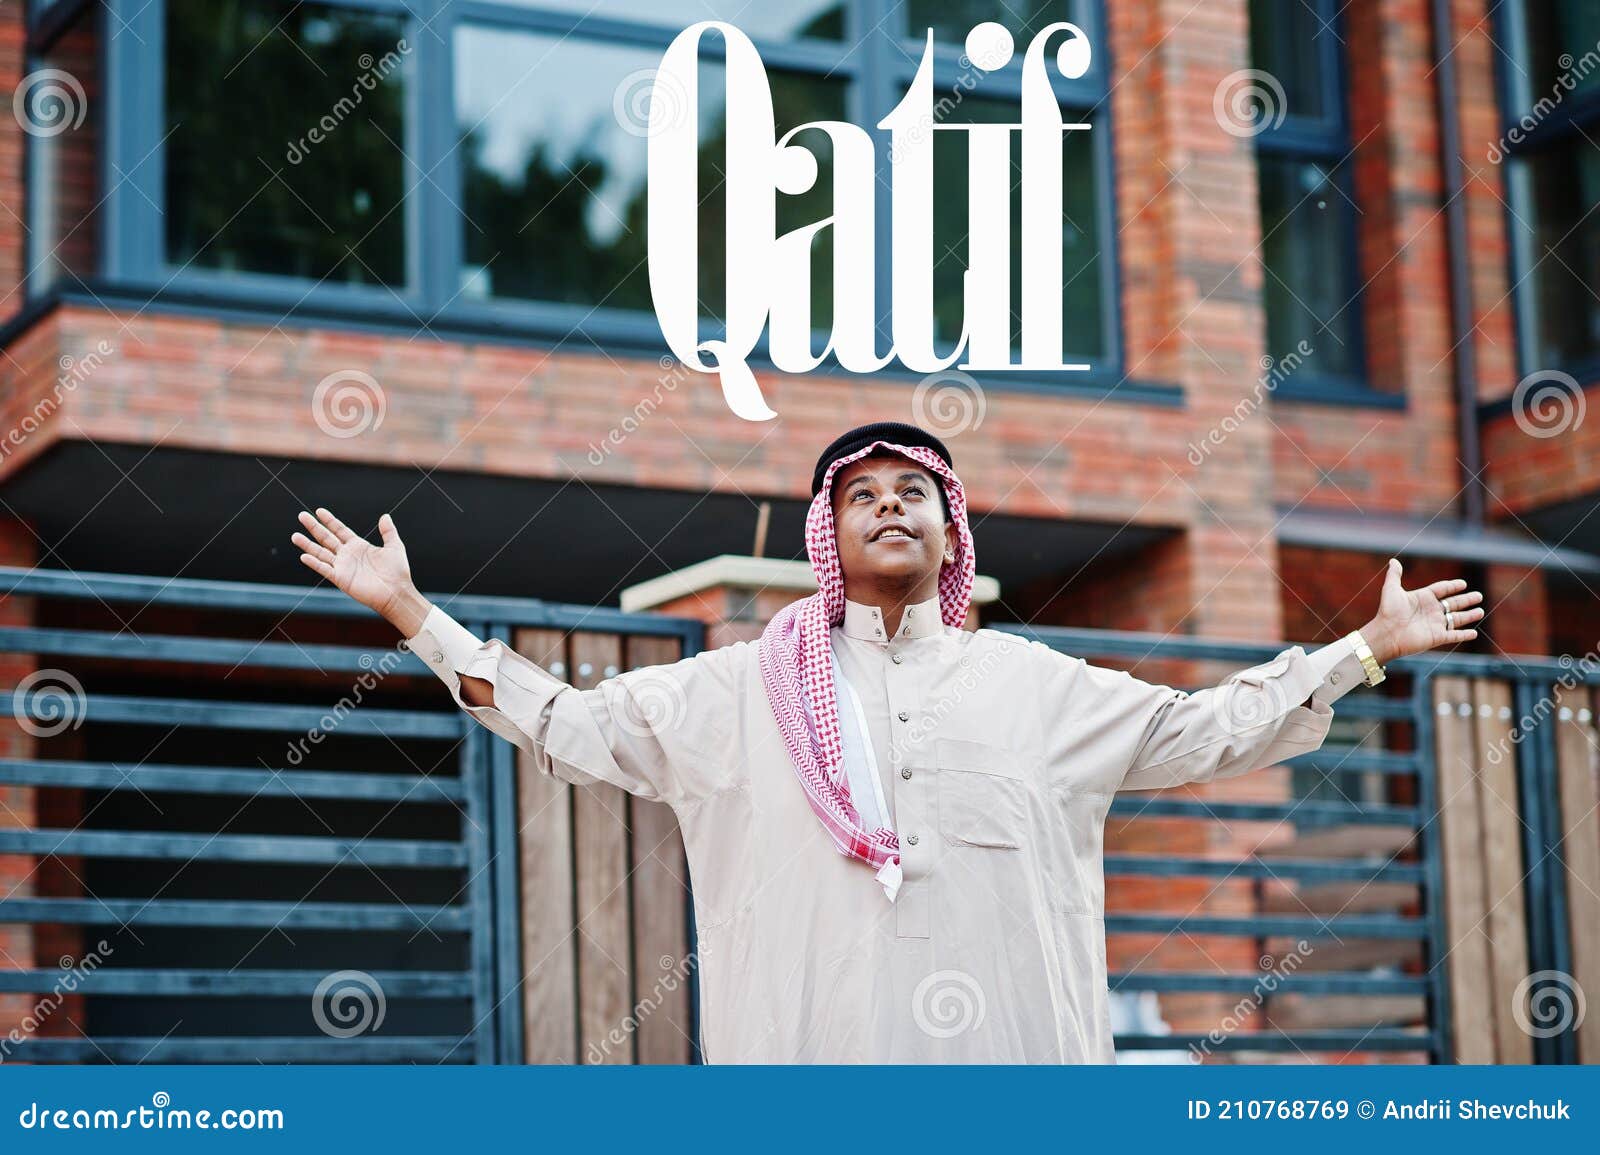 qatif - biggest city of saudi arabia. middle eastern saudi arabian man posed on street against modern building up his hands in the